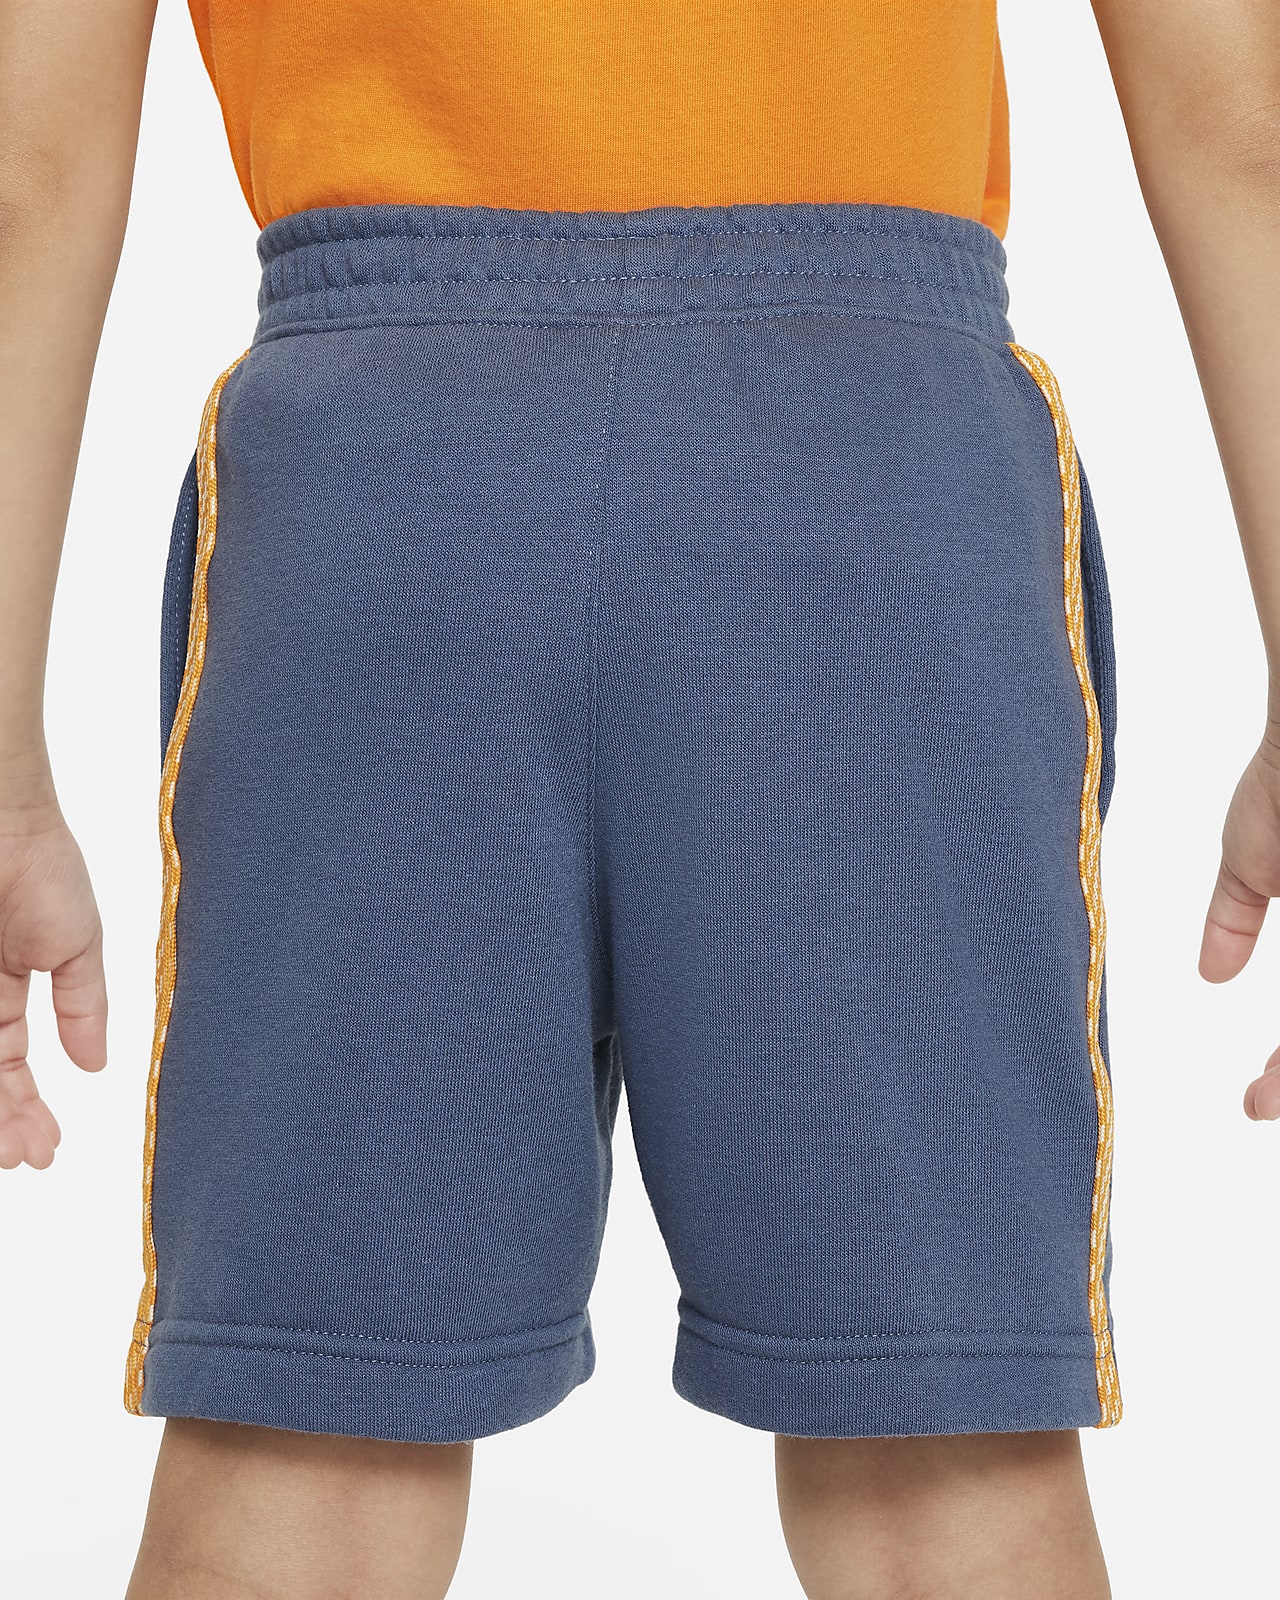 Boys Cargo Shorts Summer Short Sport Cotton Sweatpants Boys Knee Length  Pants Size 6 8 10 12 13 14 Year Hot Pants Kids Clothes - AliExpress